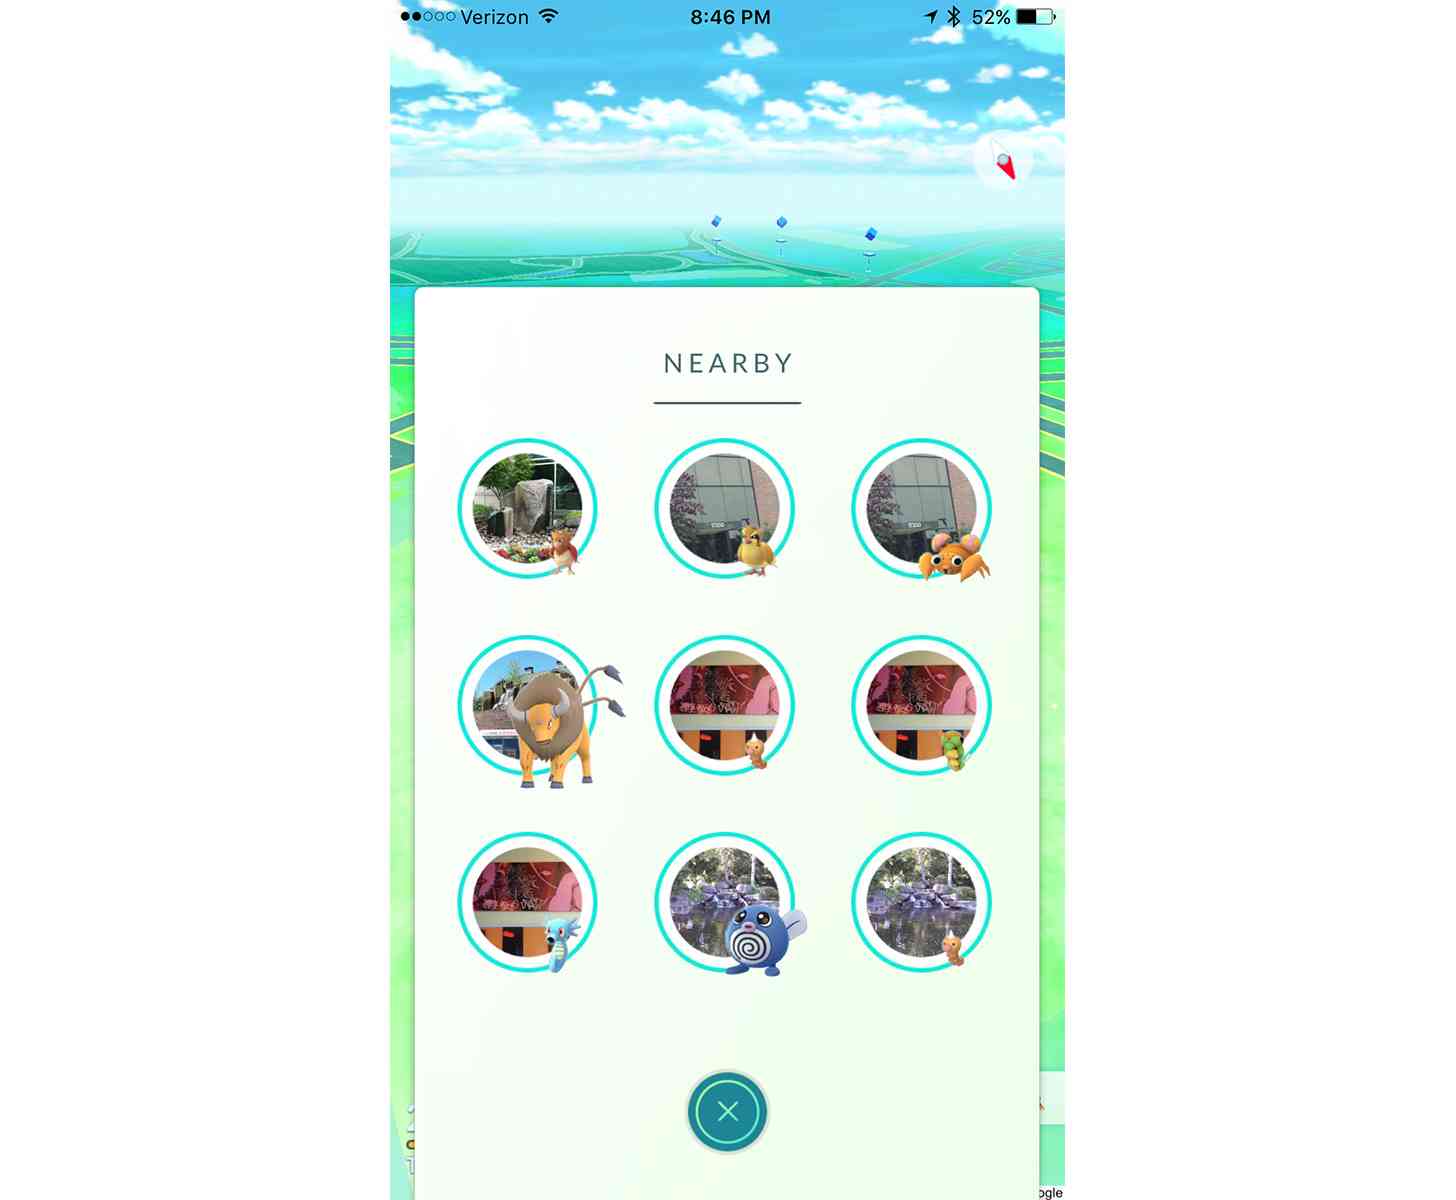 Pokémon Go Nearby feature